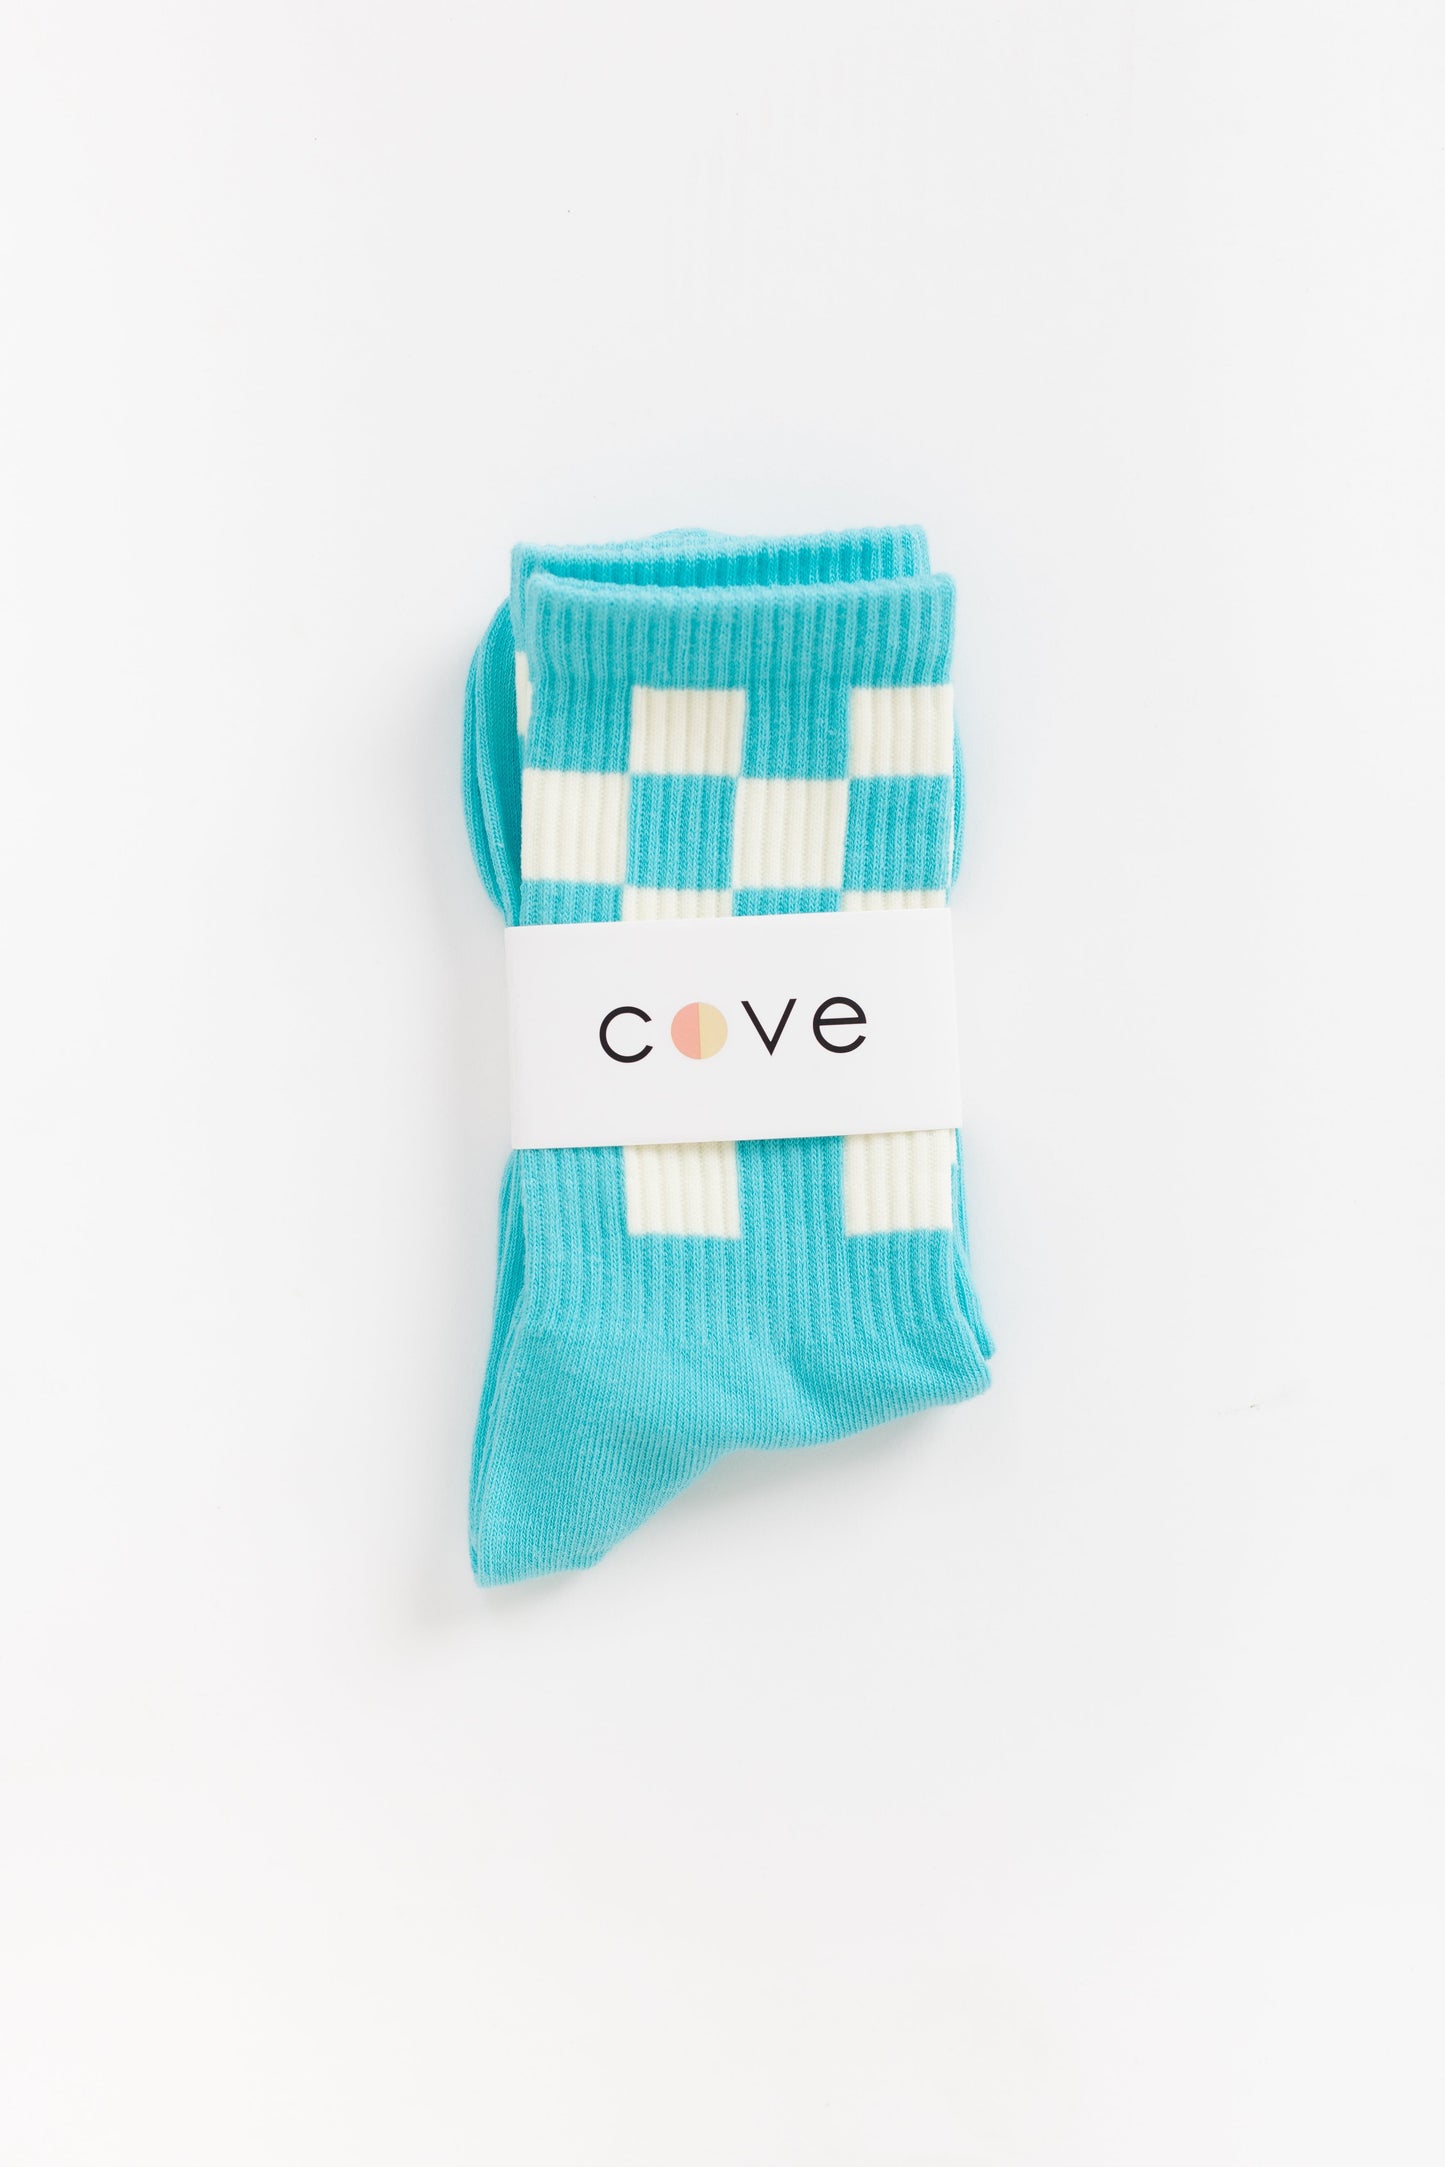 Checker Retro Socks WOMEN'S SOCKS Cove Accessories Teal/White OS 